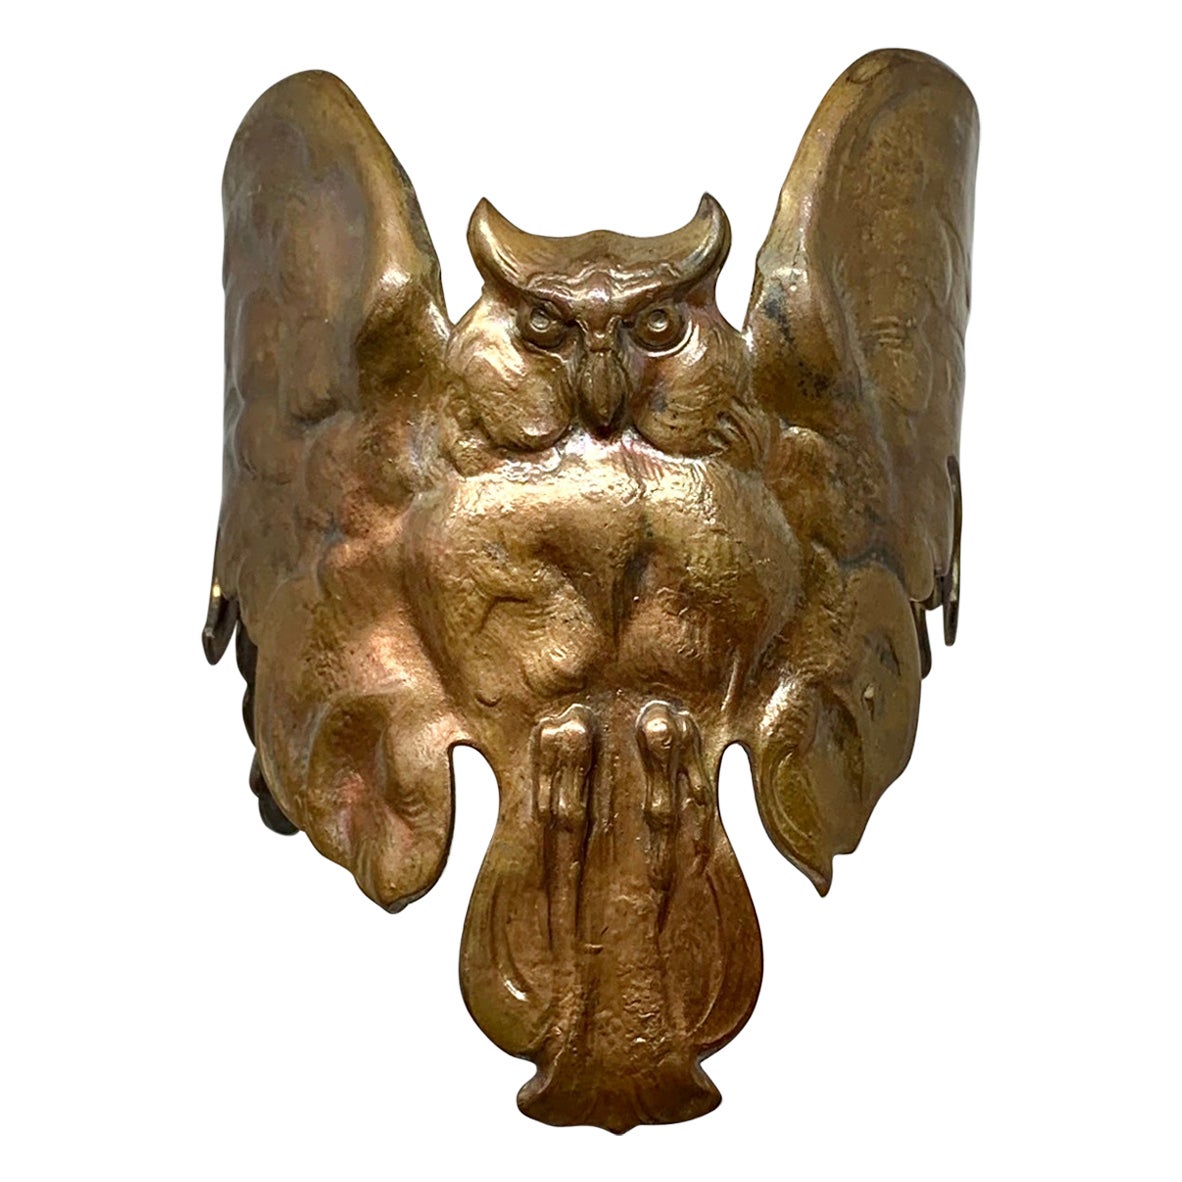 Modernist Art Nouveau Owl in Flight Cuff Bracelet Circa 1910 Rare Bird Motif